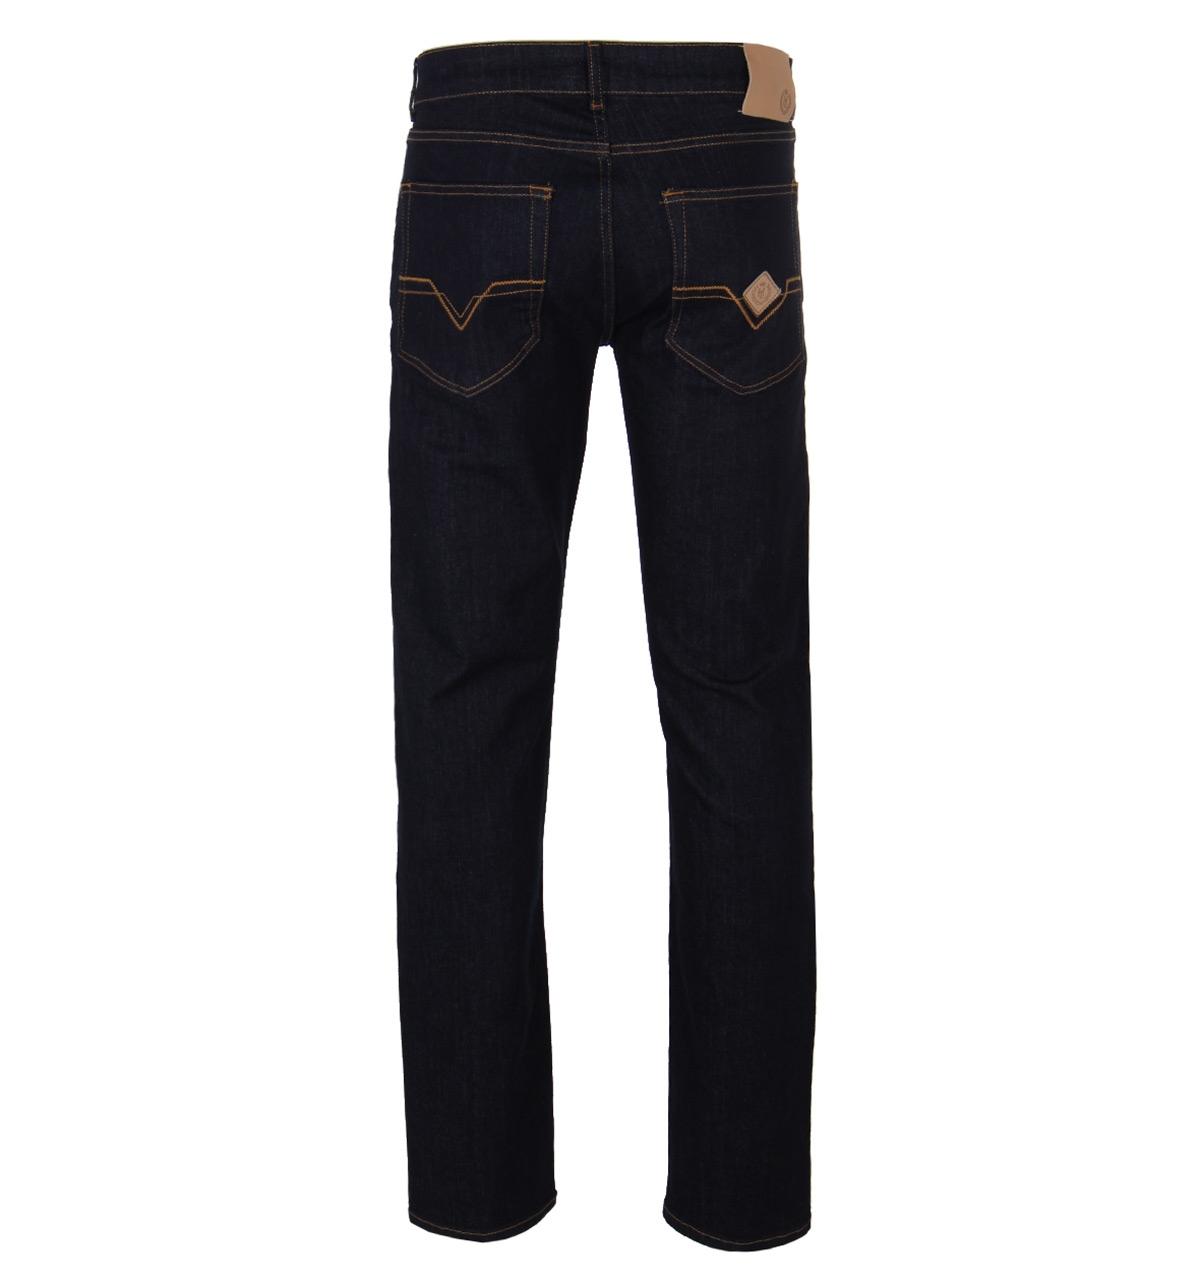 Henri Lloyd Dark Blue Wash Manston Denim Regular Fit Jeans for Men - Lyst